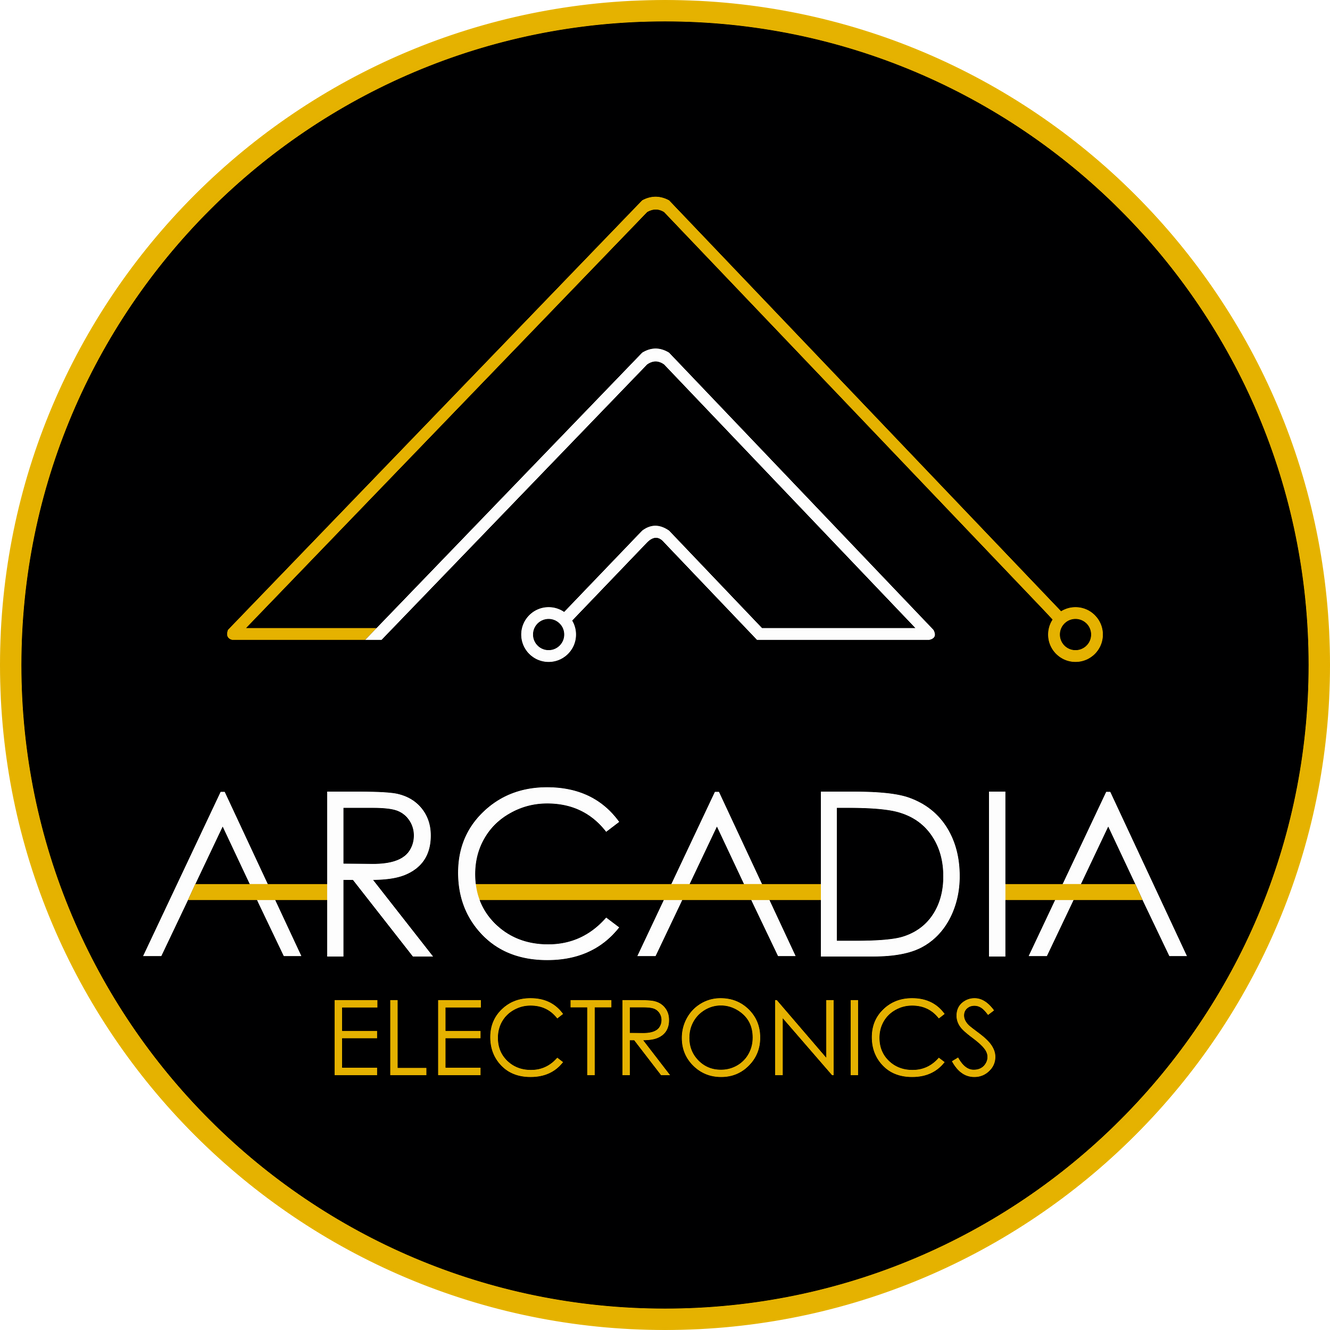 www.arcadiaelectronics.com